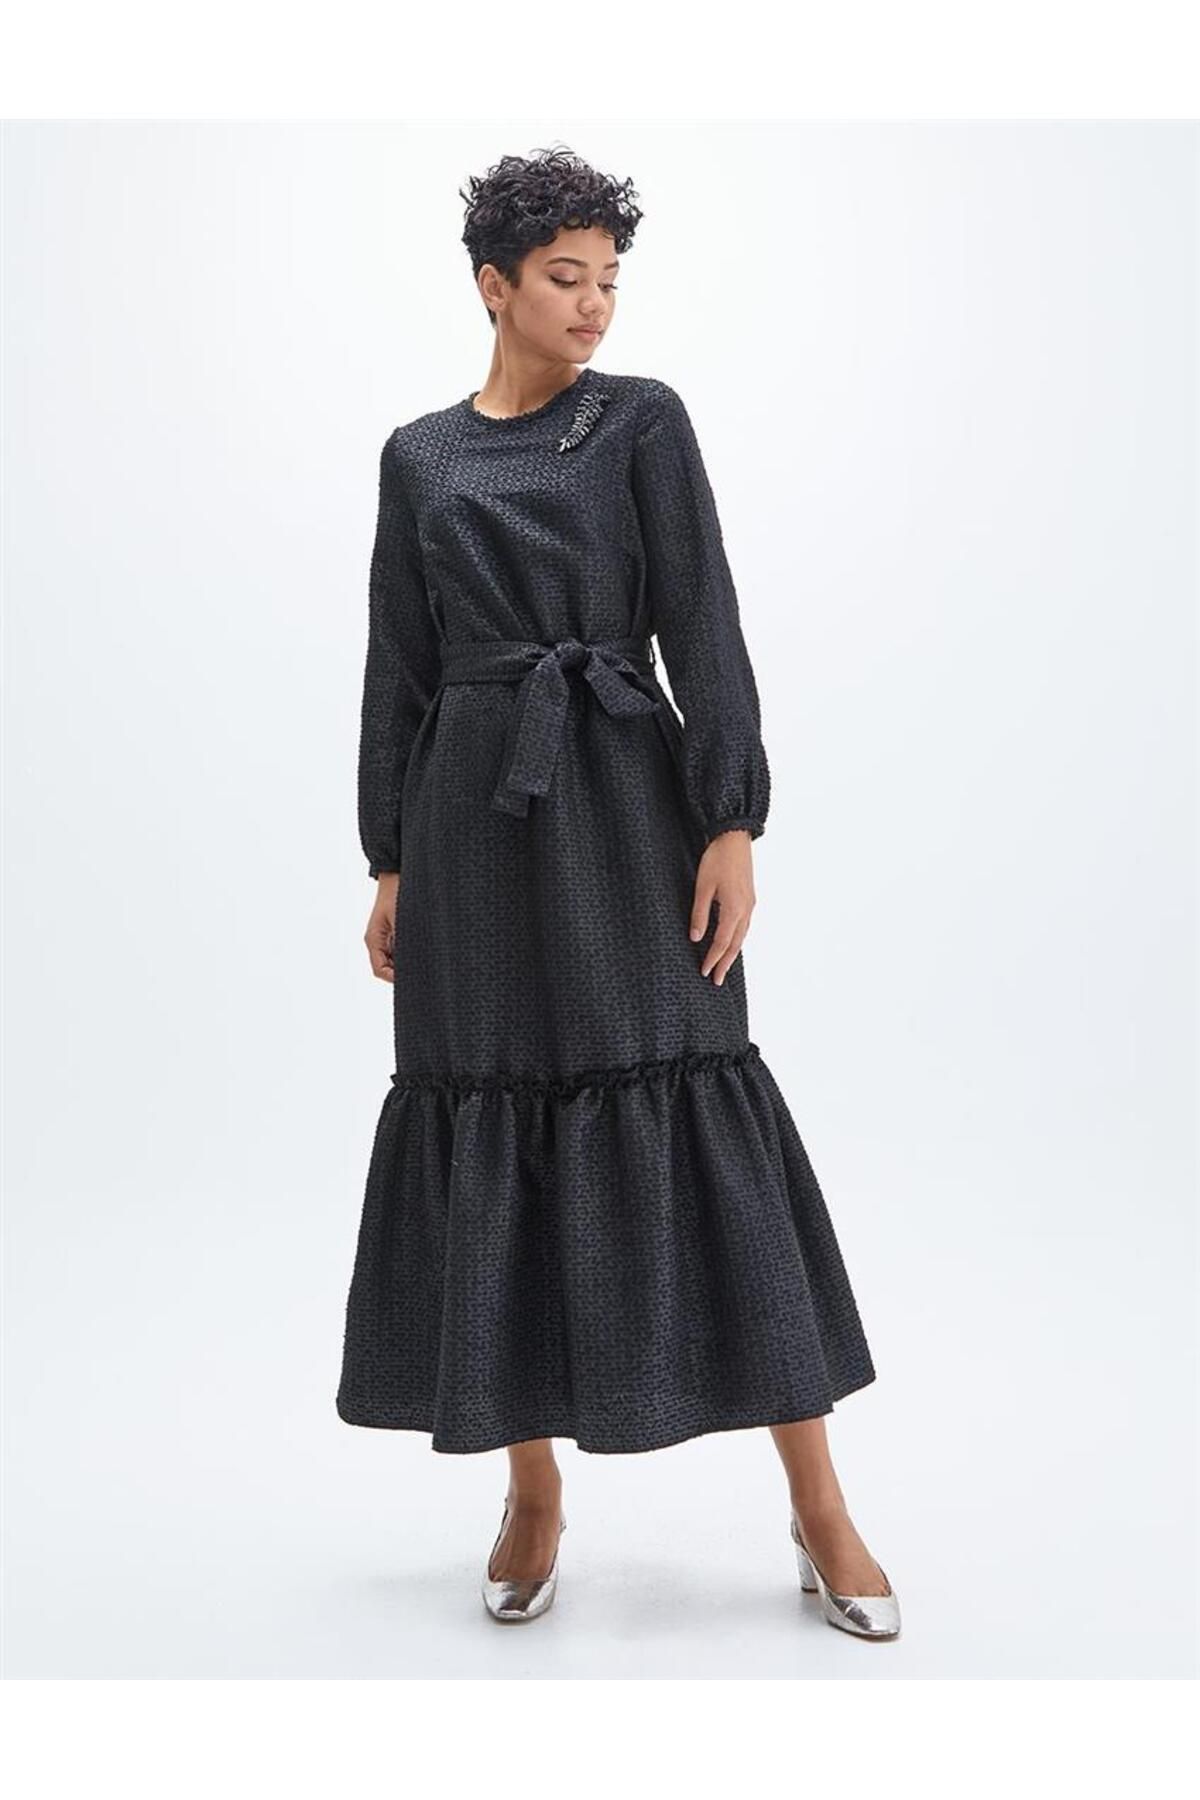 Kayra Kuşaklı Siyah Tüvit Elbise